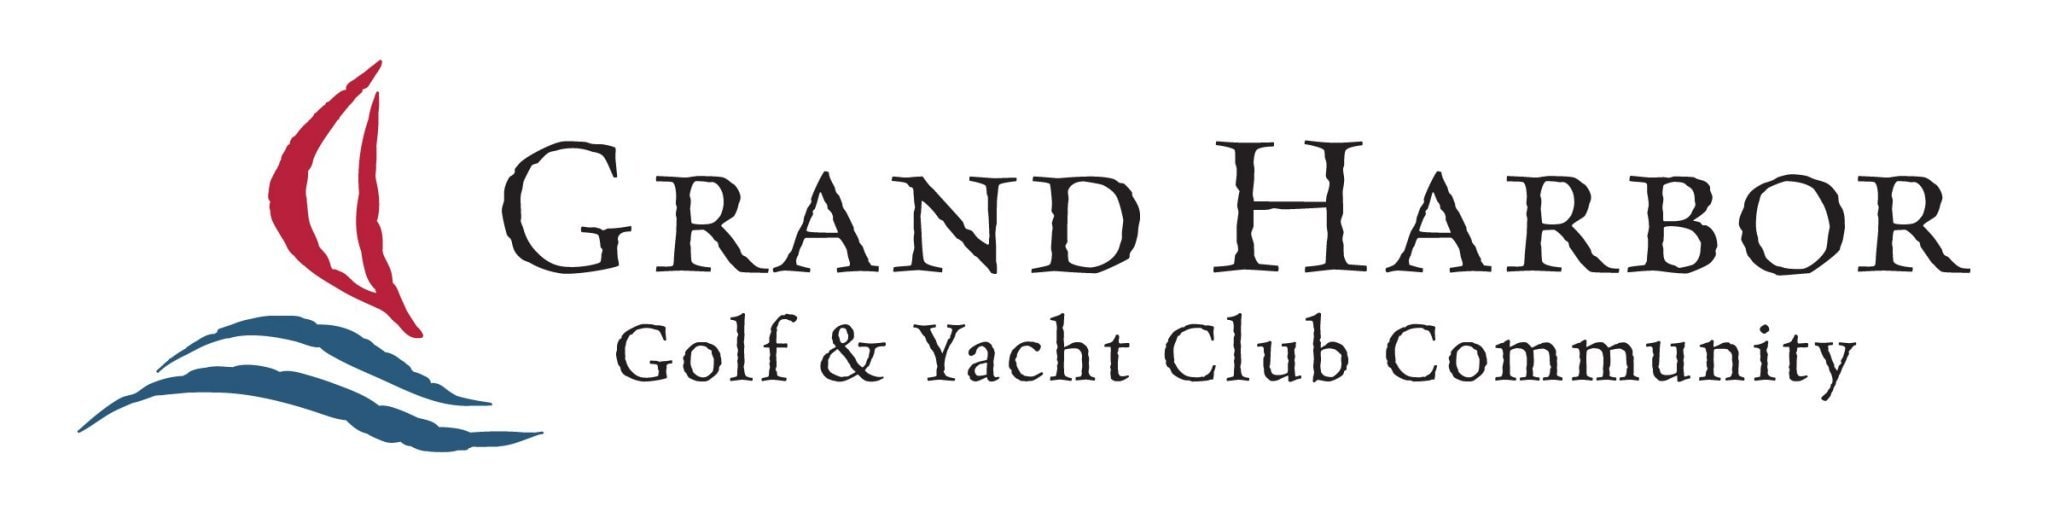 harbour yacht club & marina sales & service